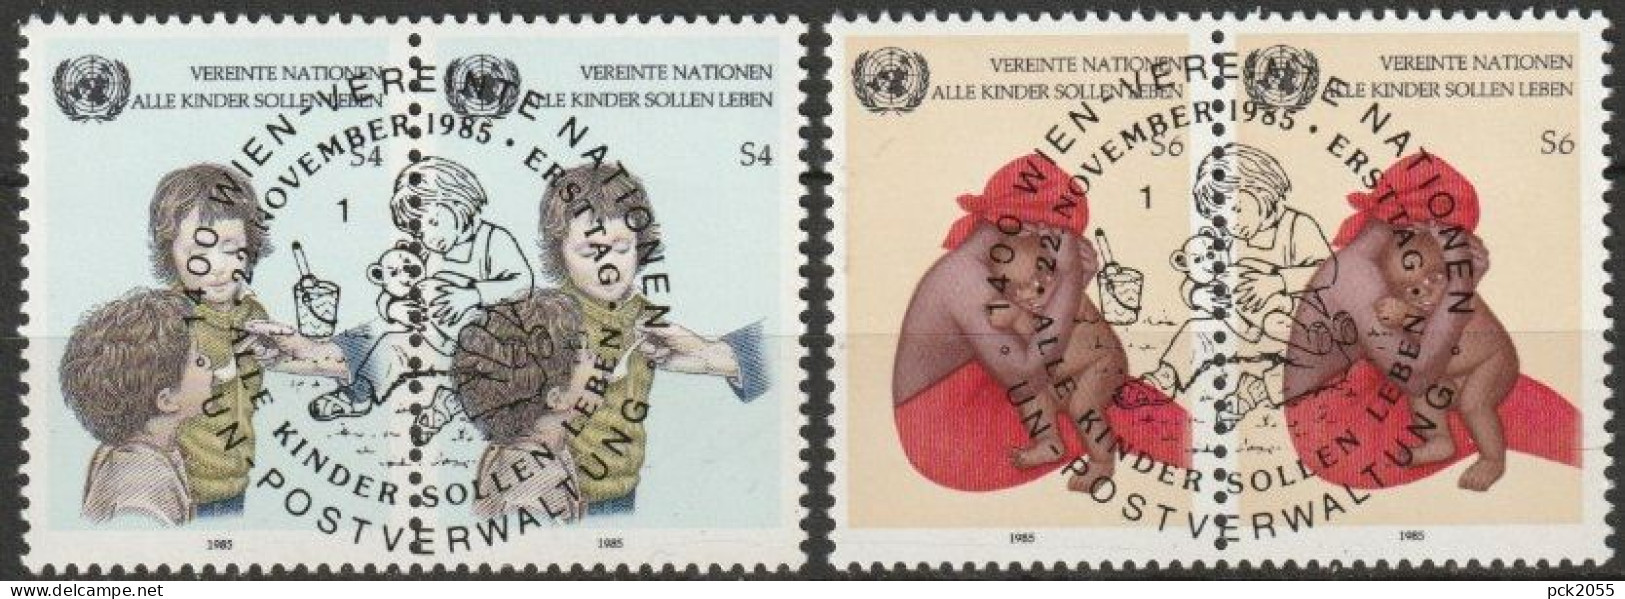 UNO Wien 1985 MiNr.53 -5 4 Paar O Gestempelt  UNICEF Gegen Kindersterblichkeit ( 2332) - Used Stamps